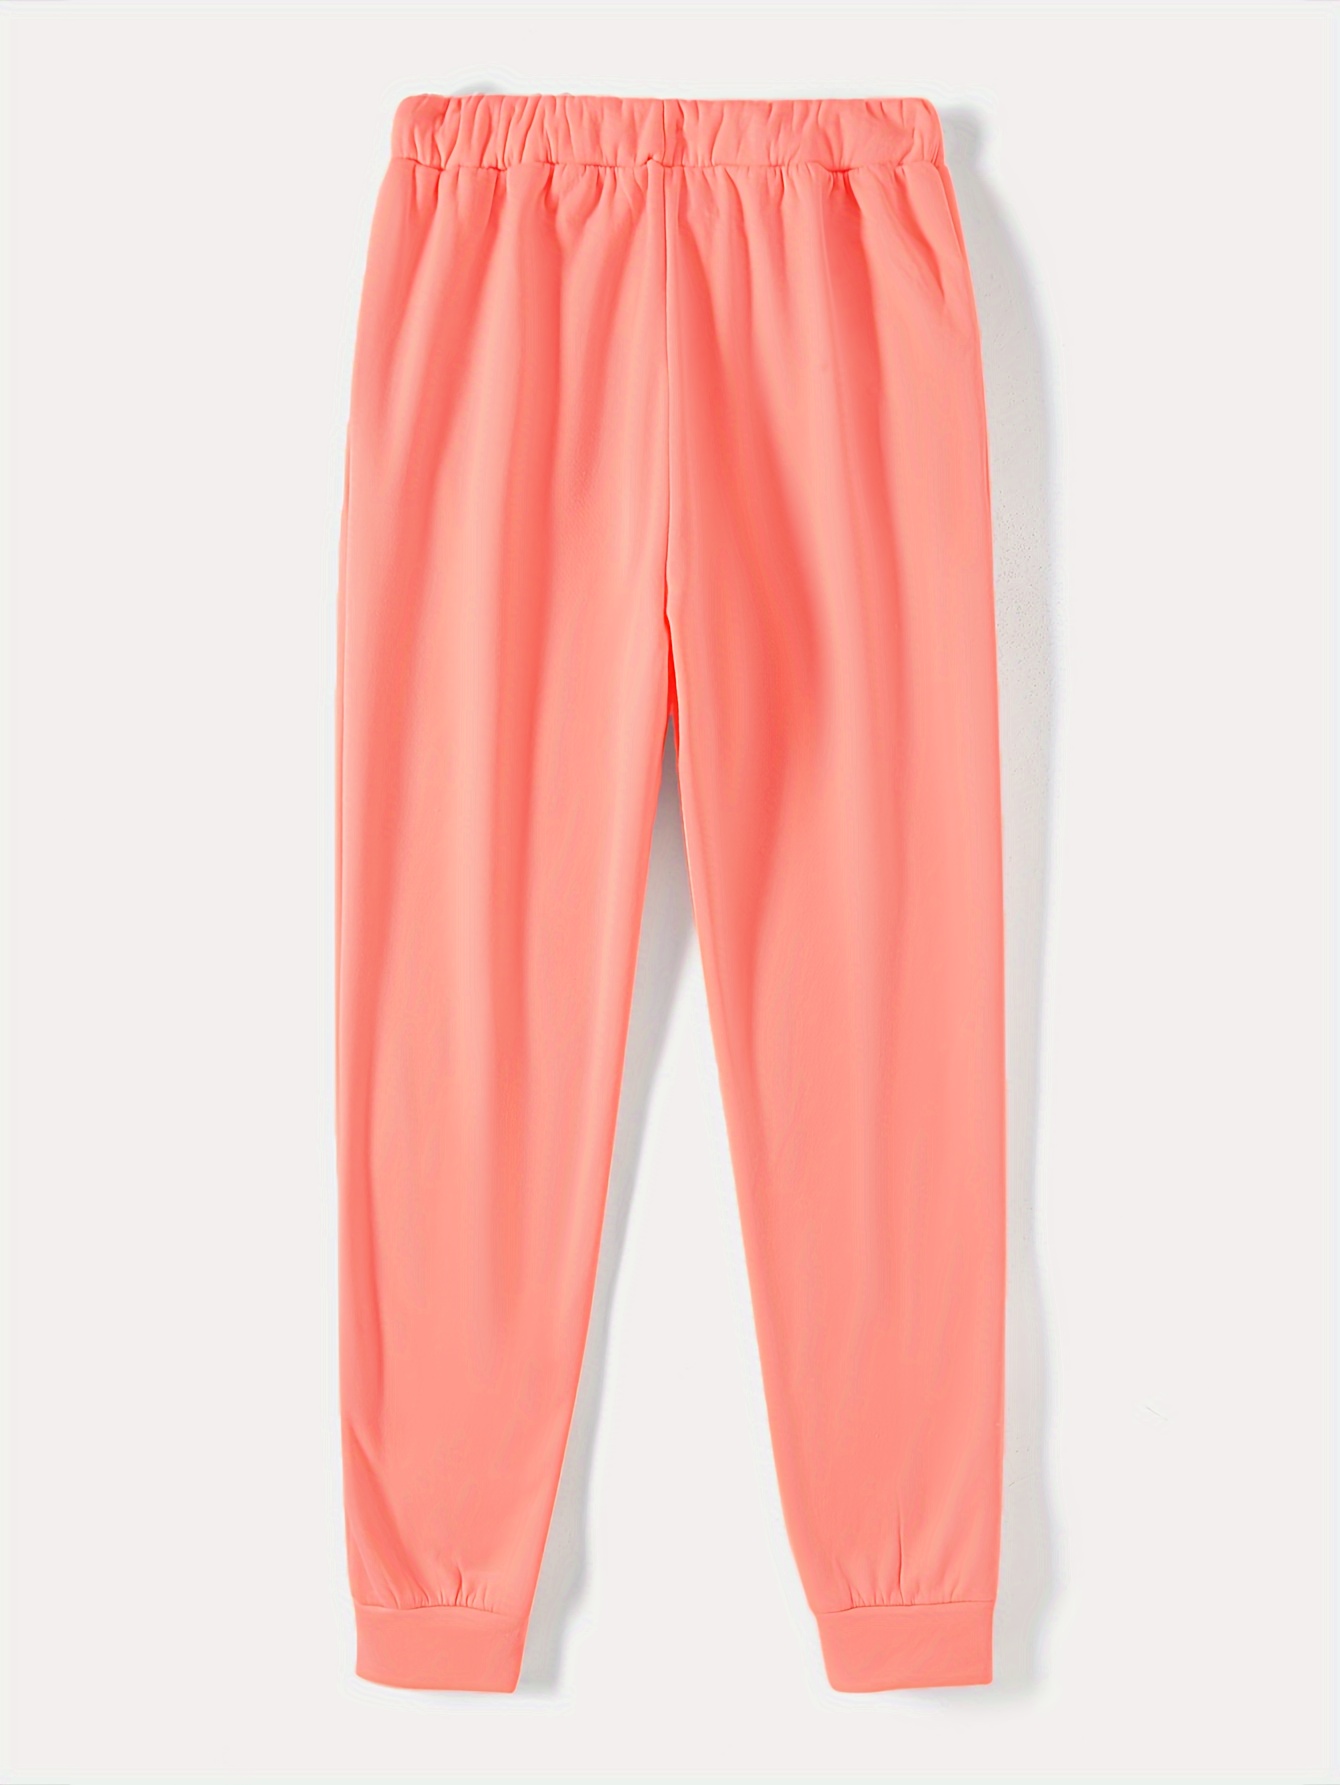 solid drawstring thermal sweatpants versatile loose comfy jogger pants womens clothing details 40